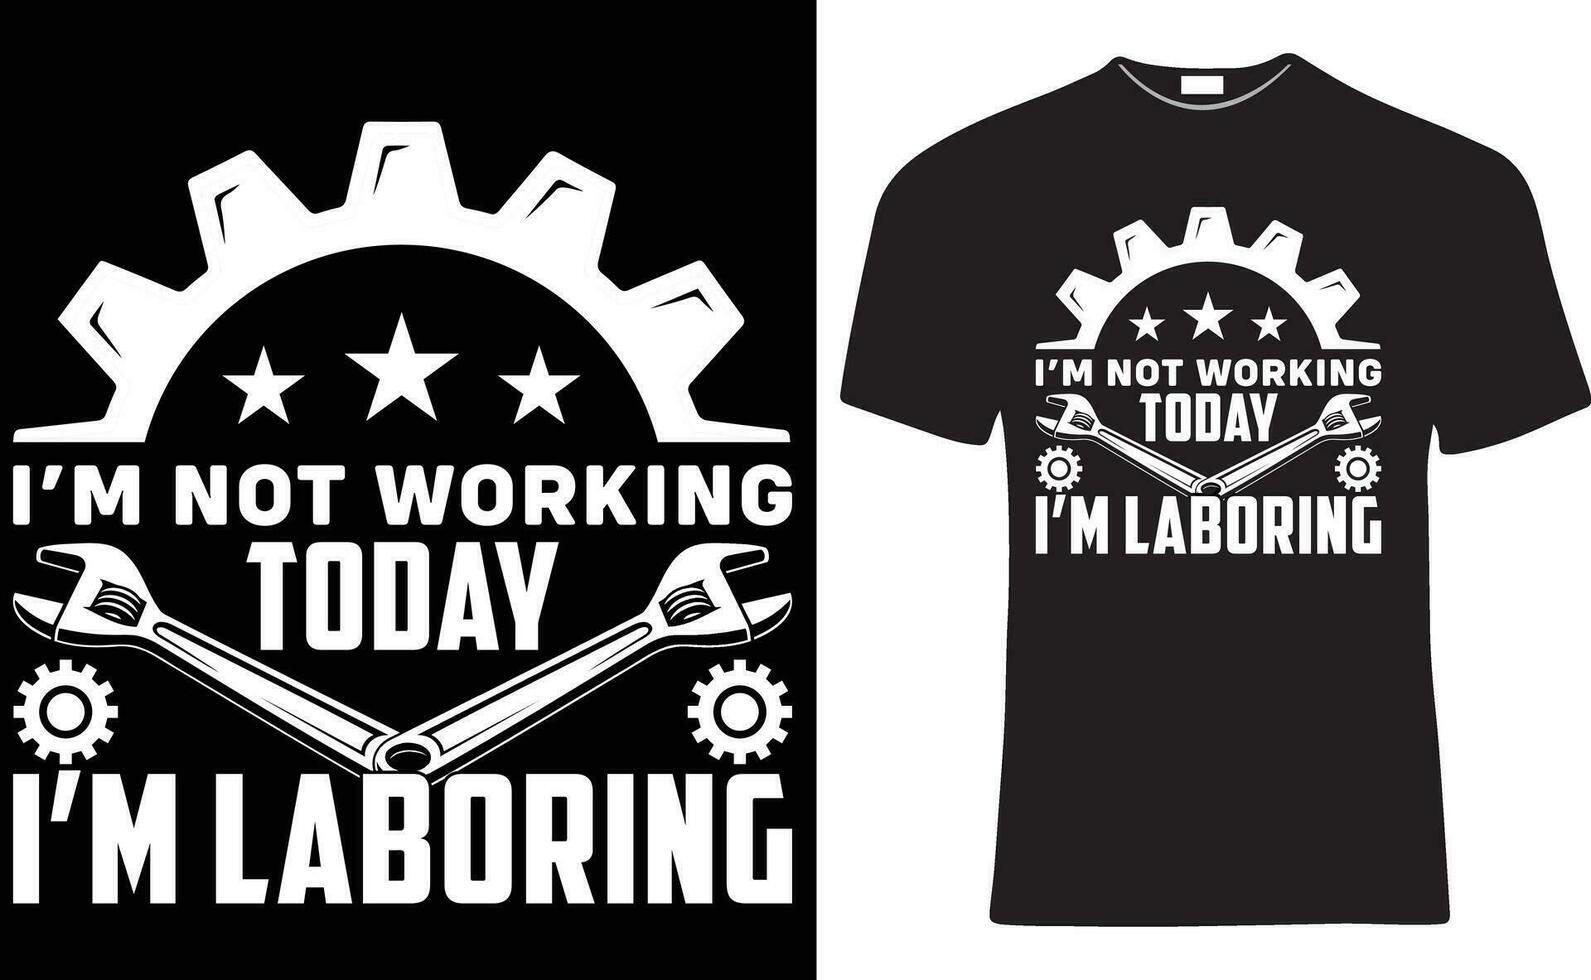 Labor Day T Shirt vector